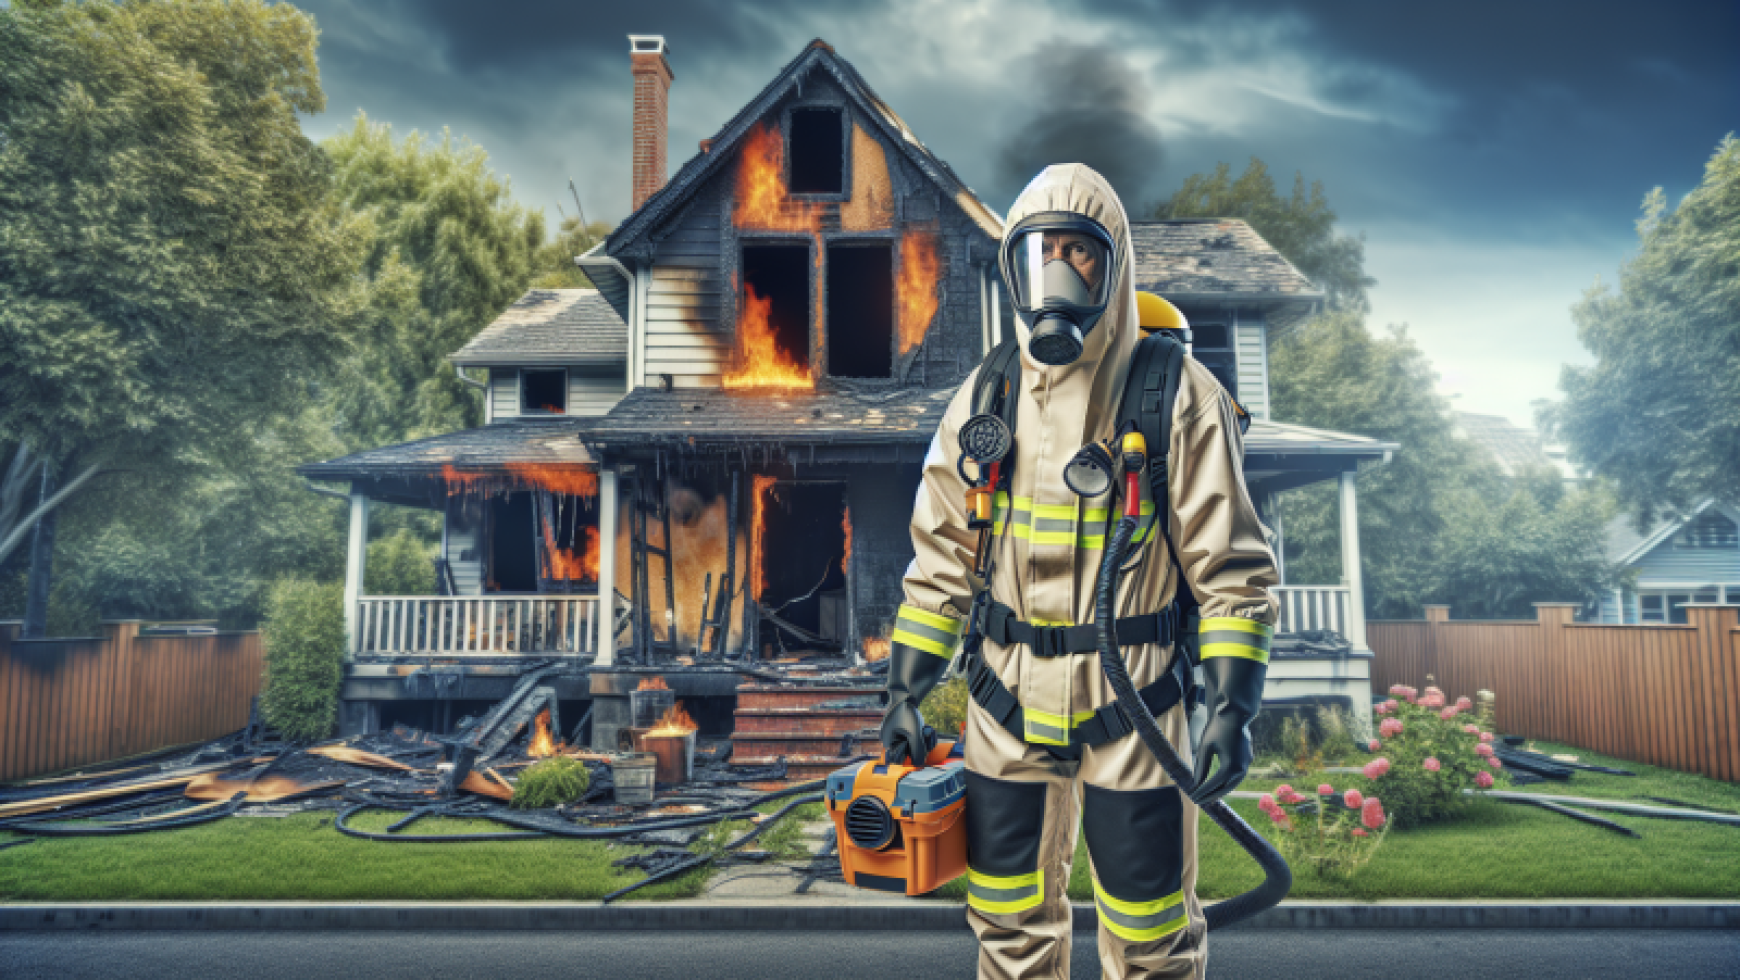 Fire Damage: Immediate Steps to Take